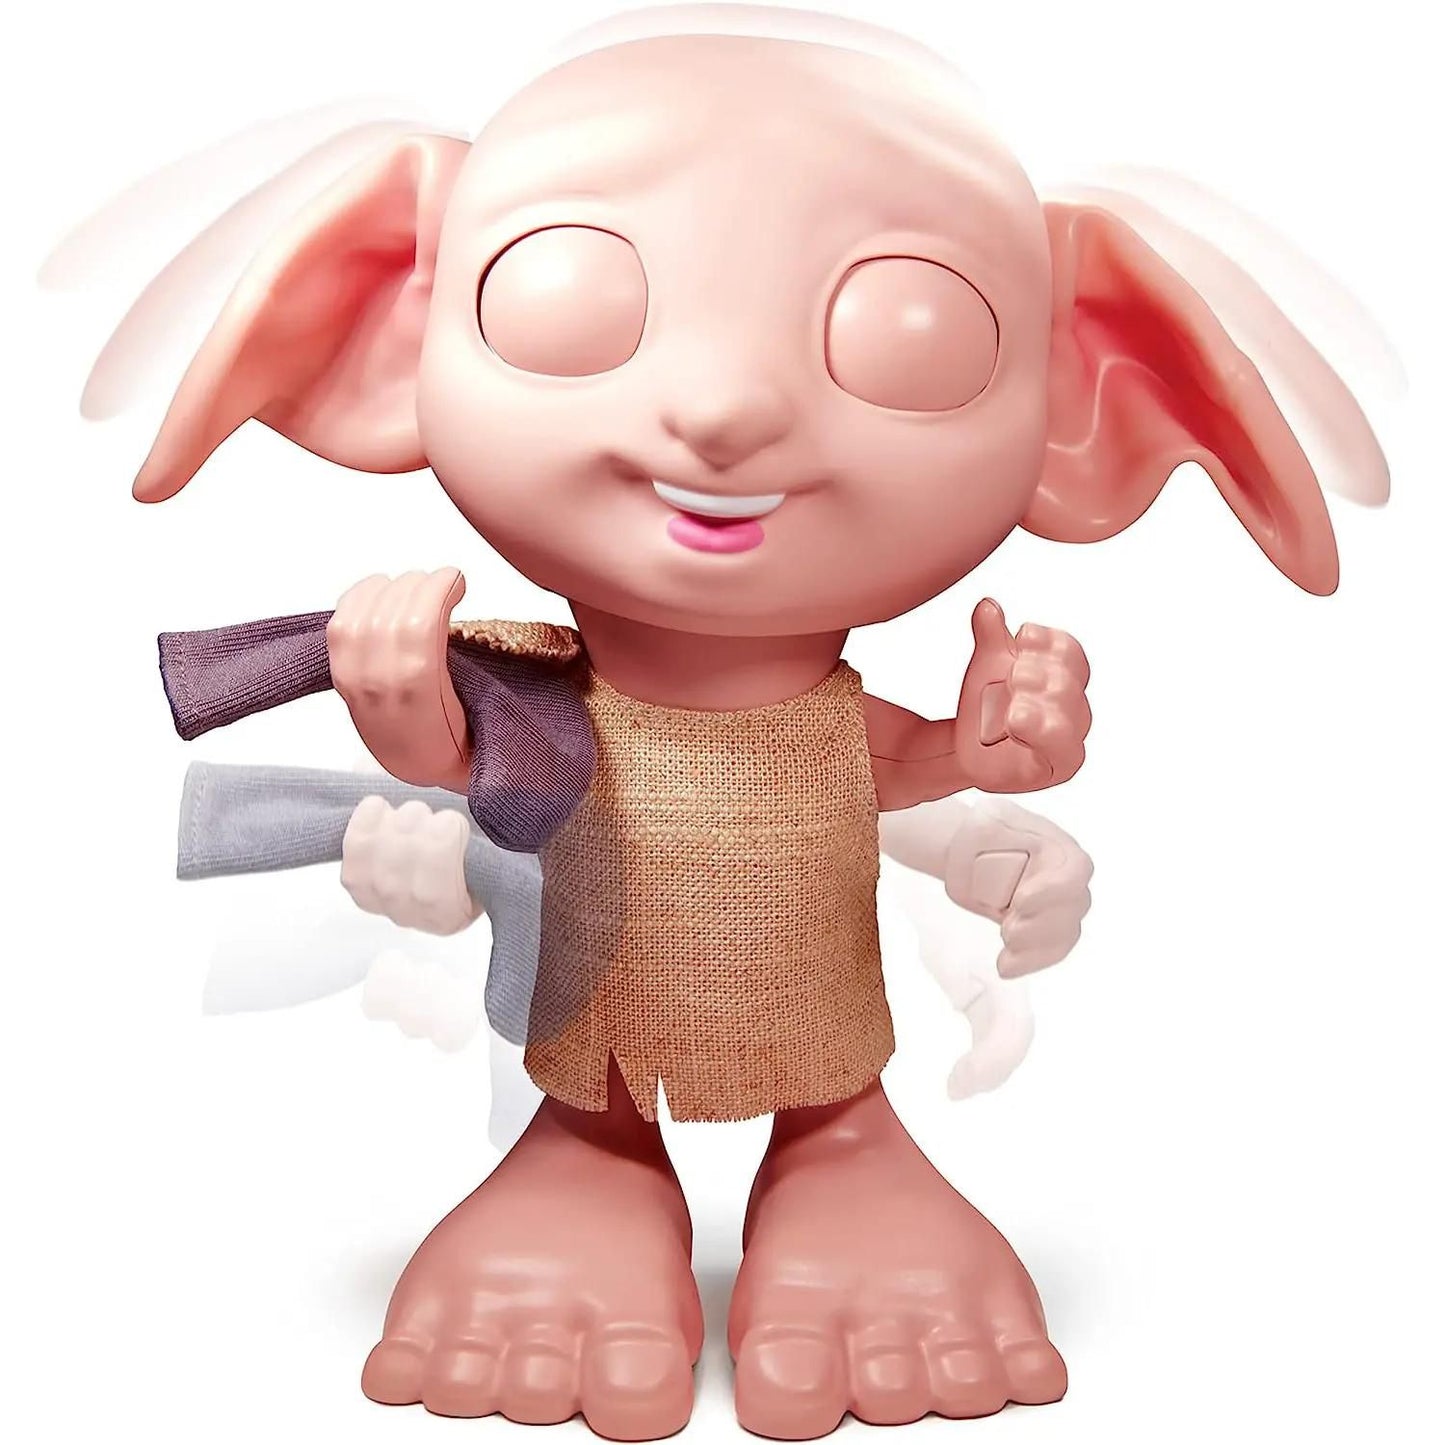 Spin Master - WIZARDING WORLD Dobby Interactive Elf